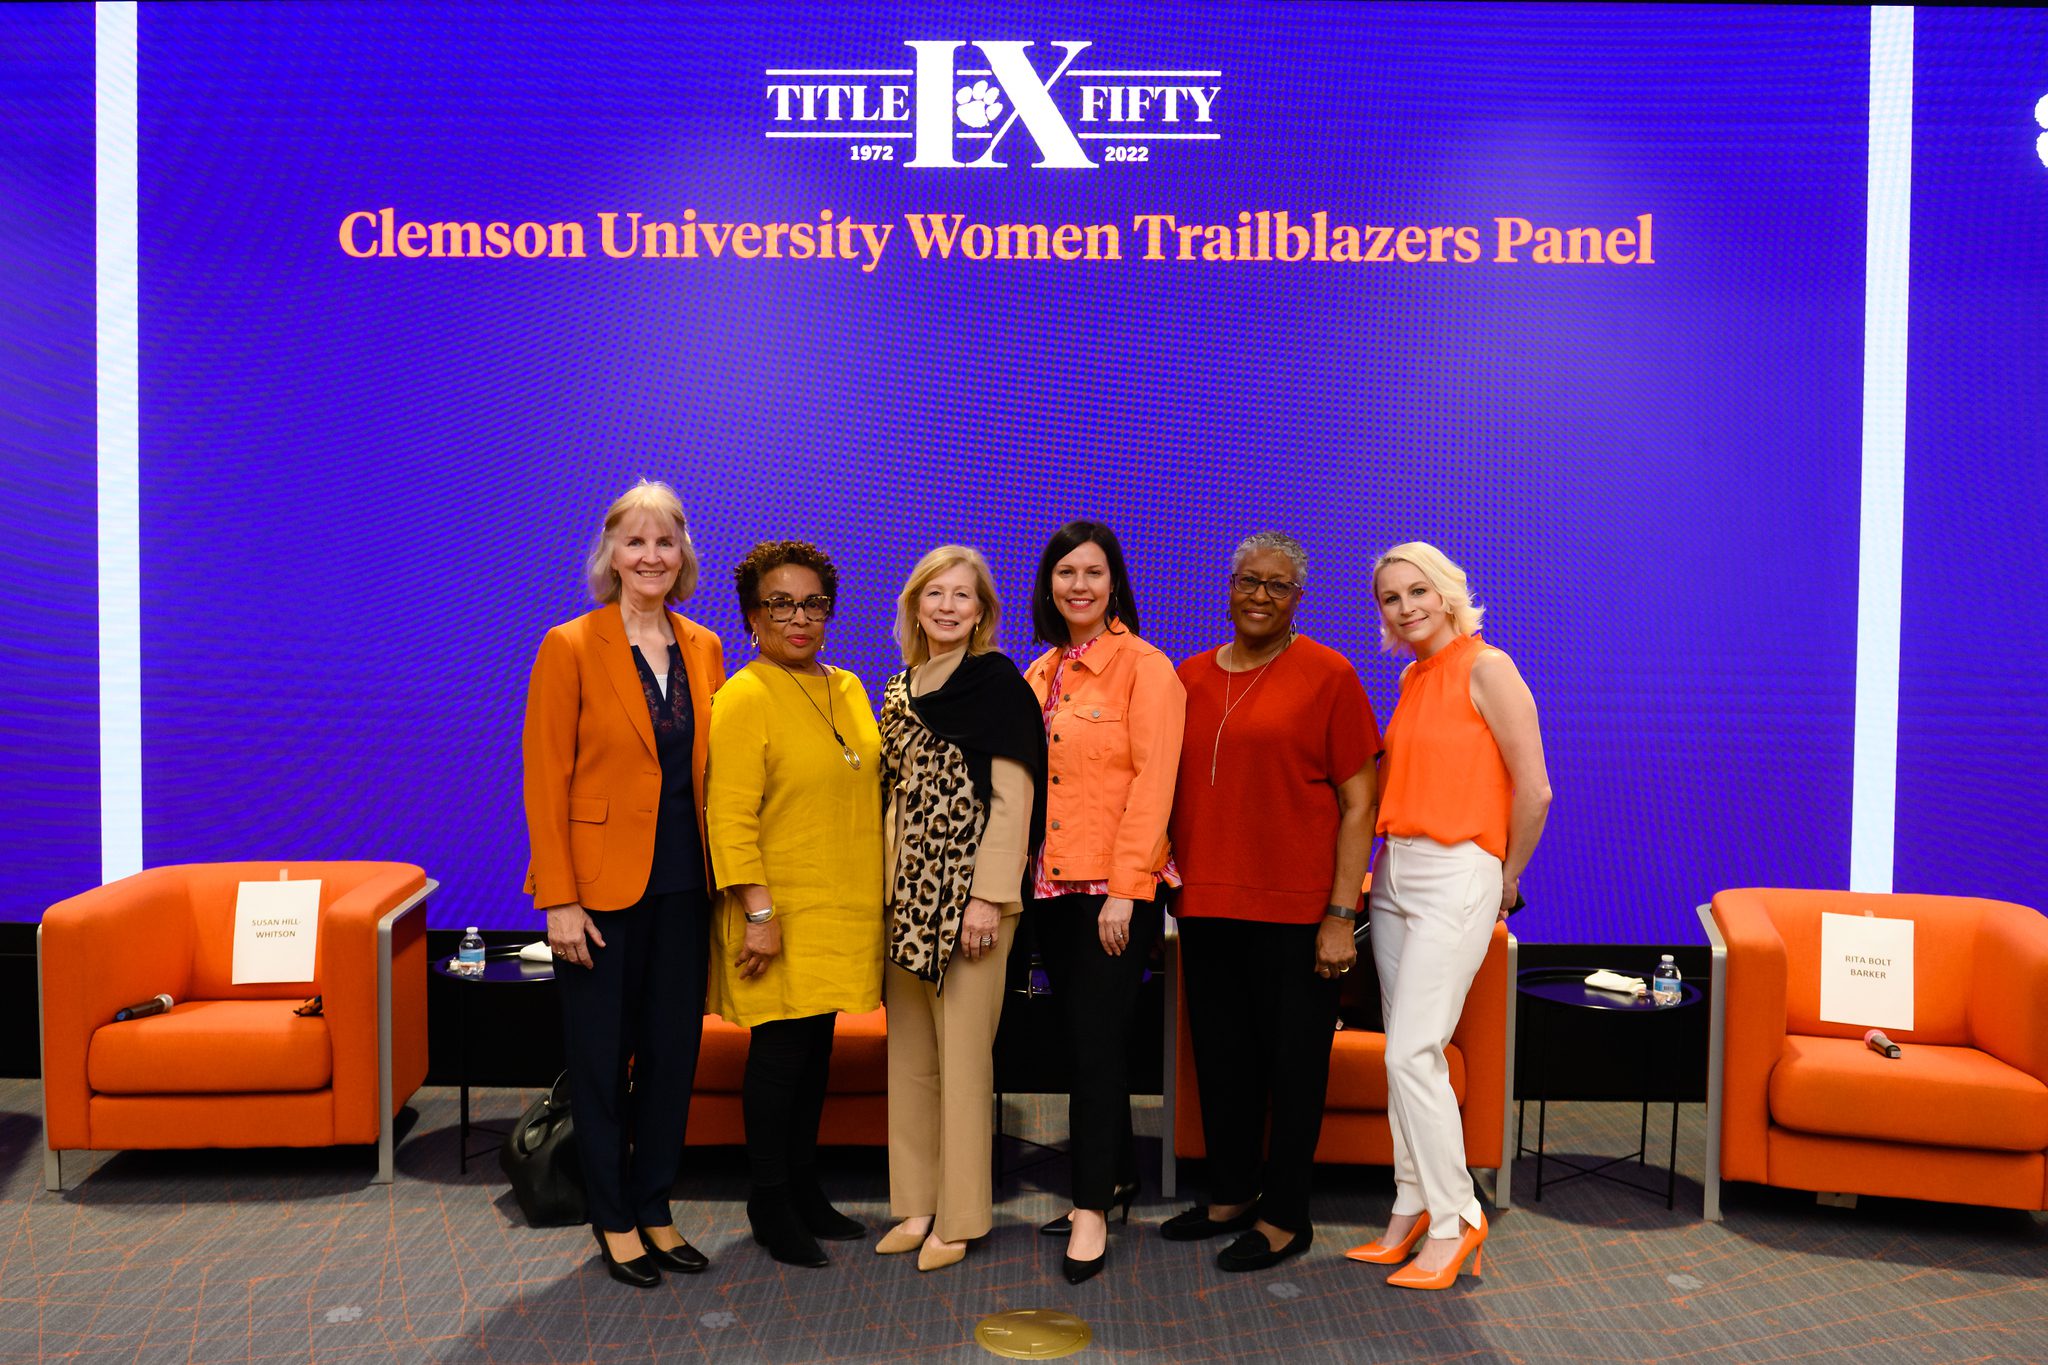 Women's Trailblazers panel members pose together